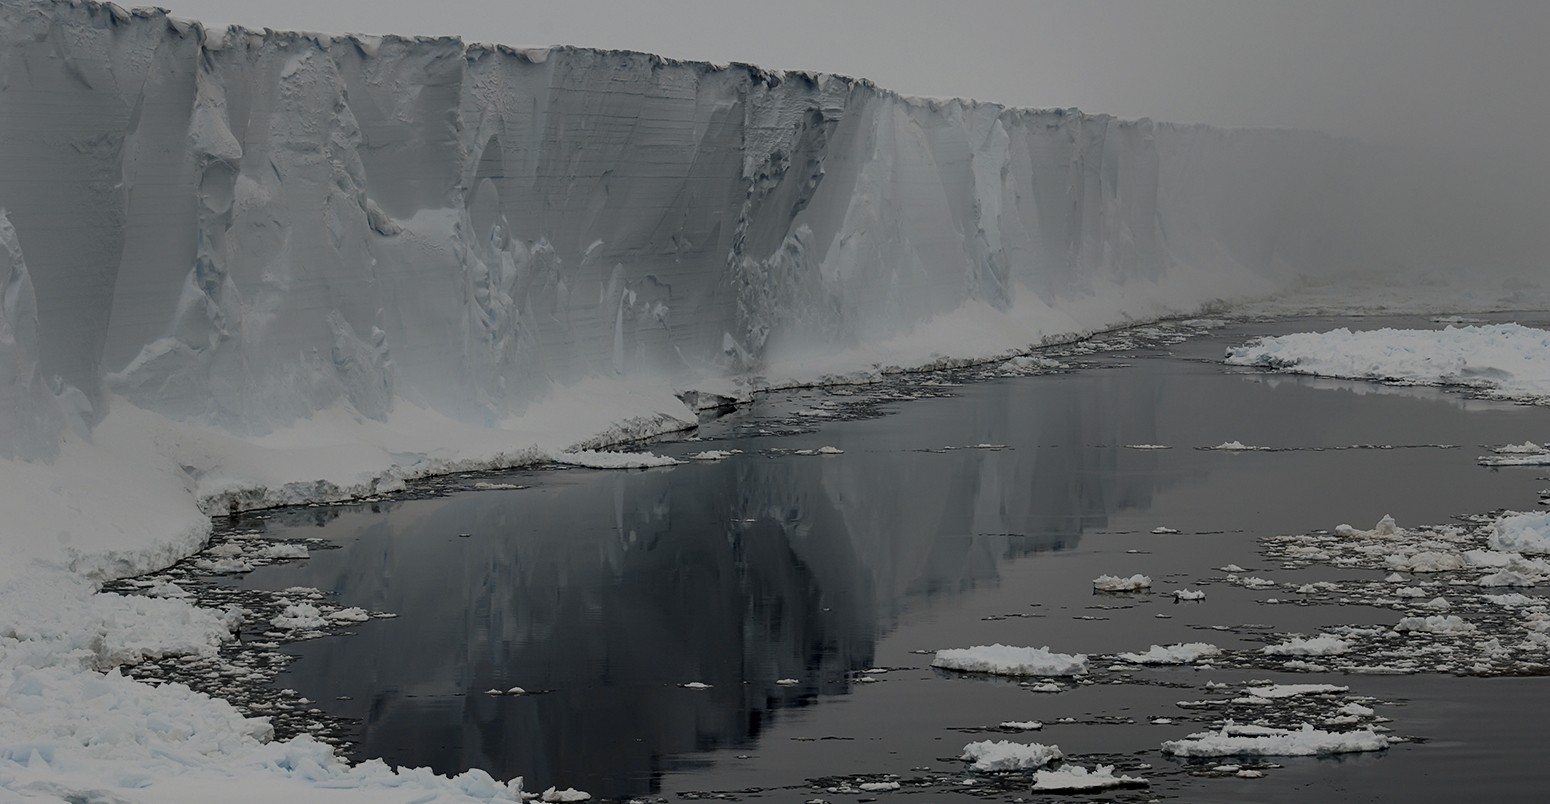 Antarctic ice shelf in the mist